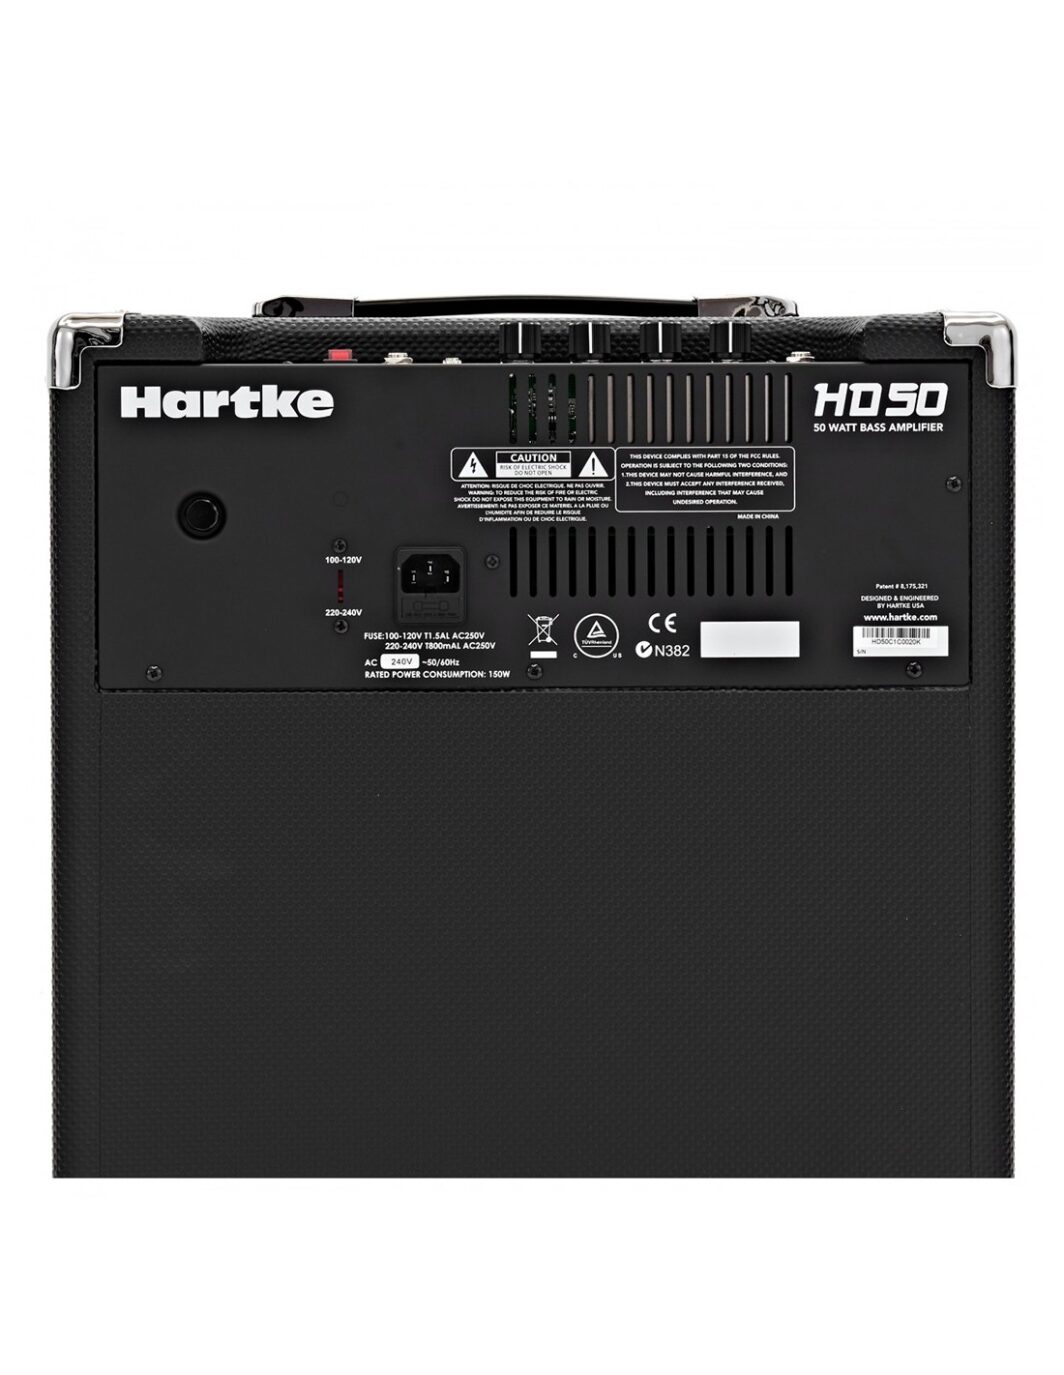 HARTKE HD 50 COMBO BASS AMPLIFIER